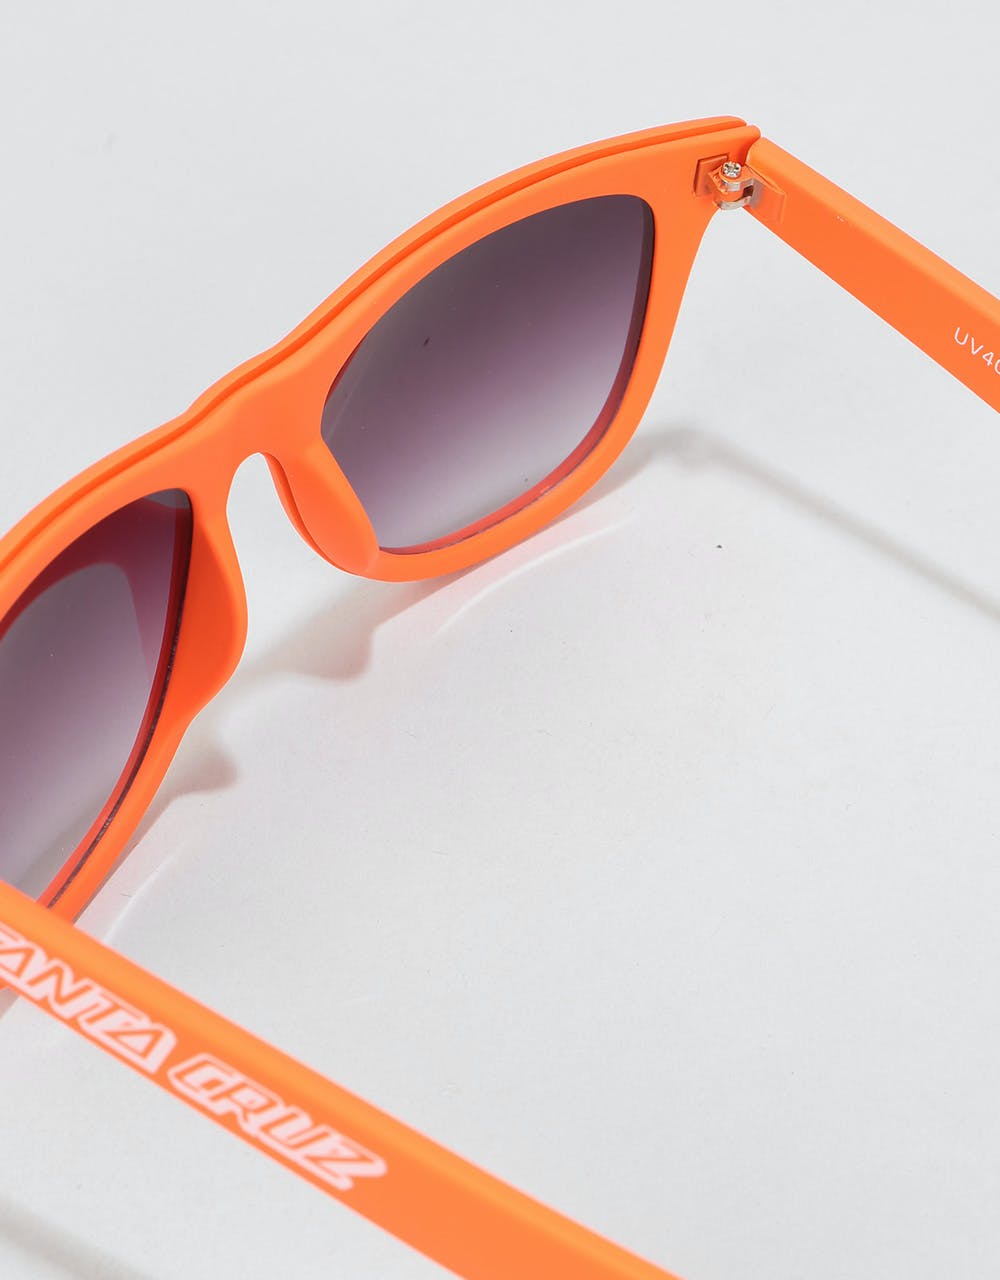 Santa Cruz Classic Strip Sunglasses - Coral